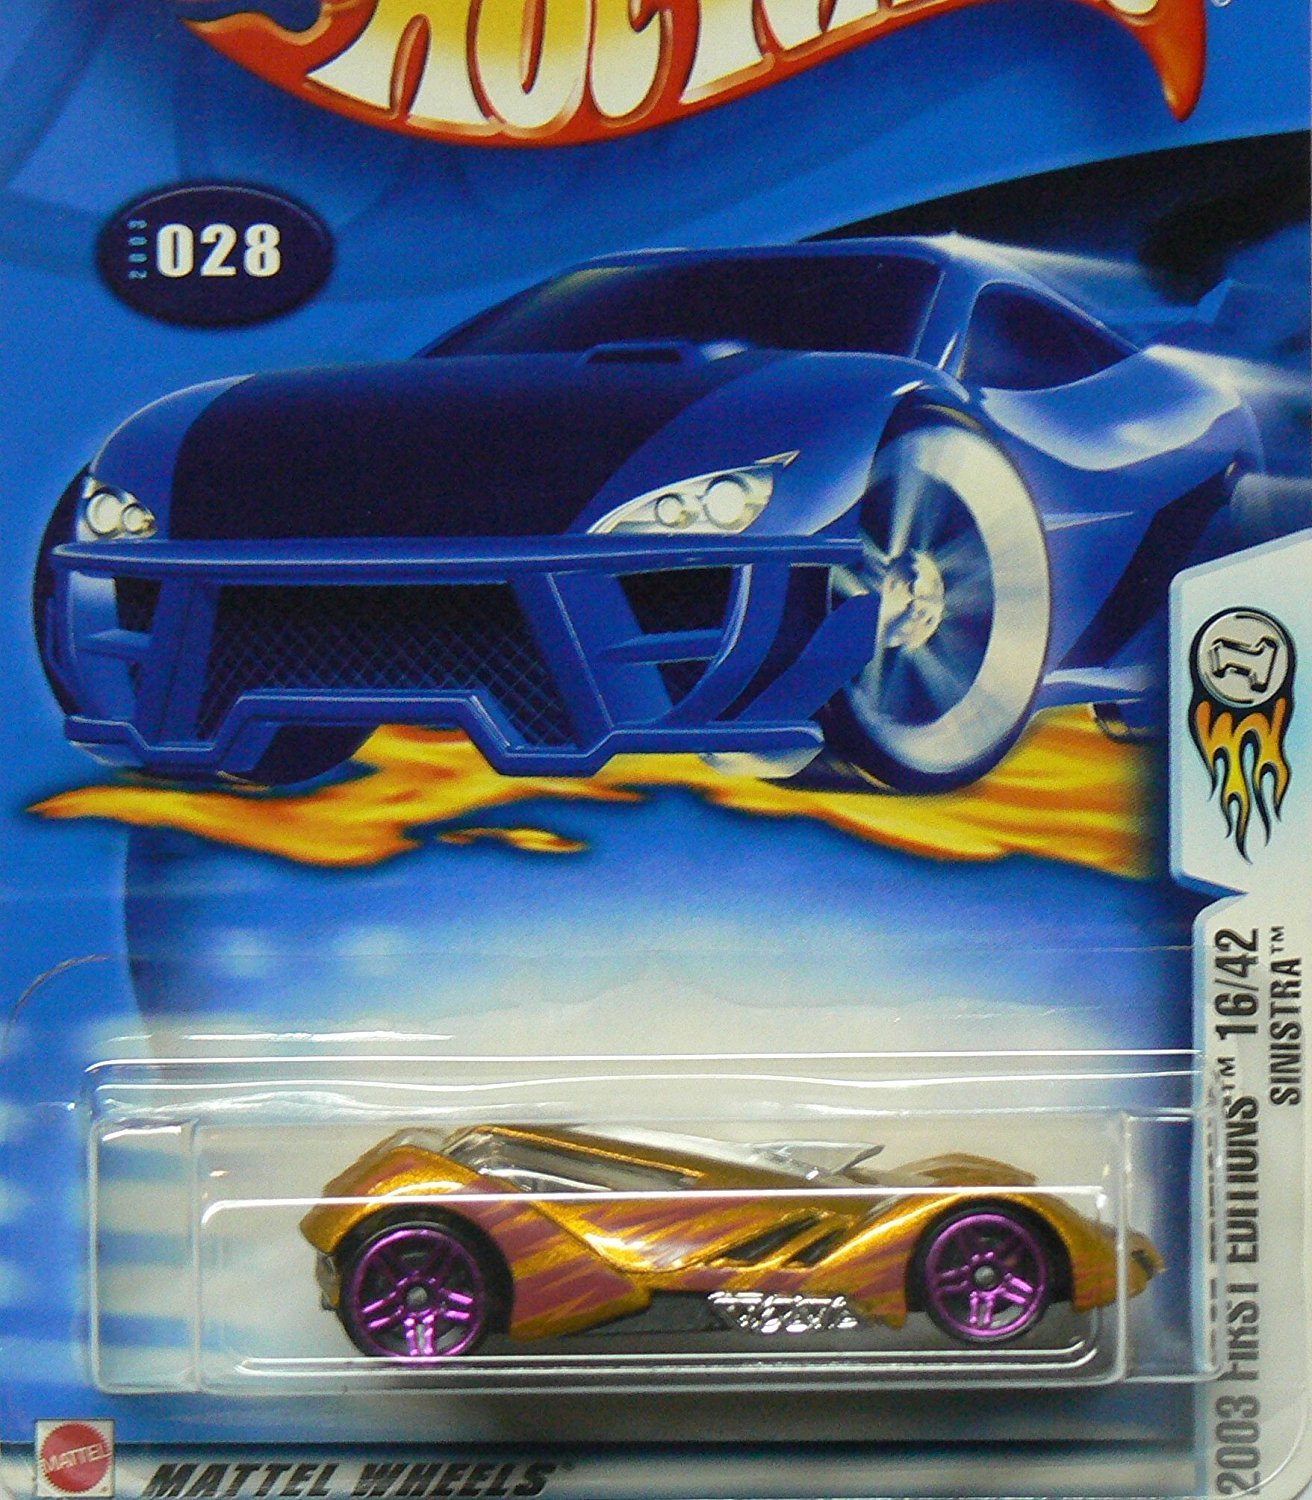 Mattel Hot Wheels 2003 First Editions 1:64 Scale Orange Sinistra Die Cast Car #0 - $6.00